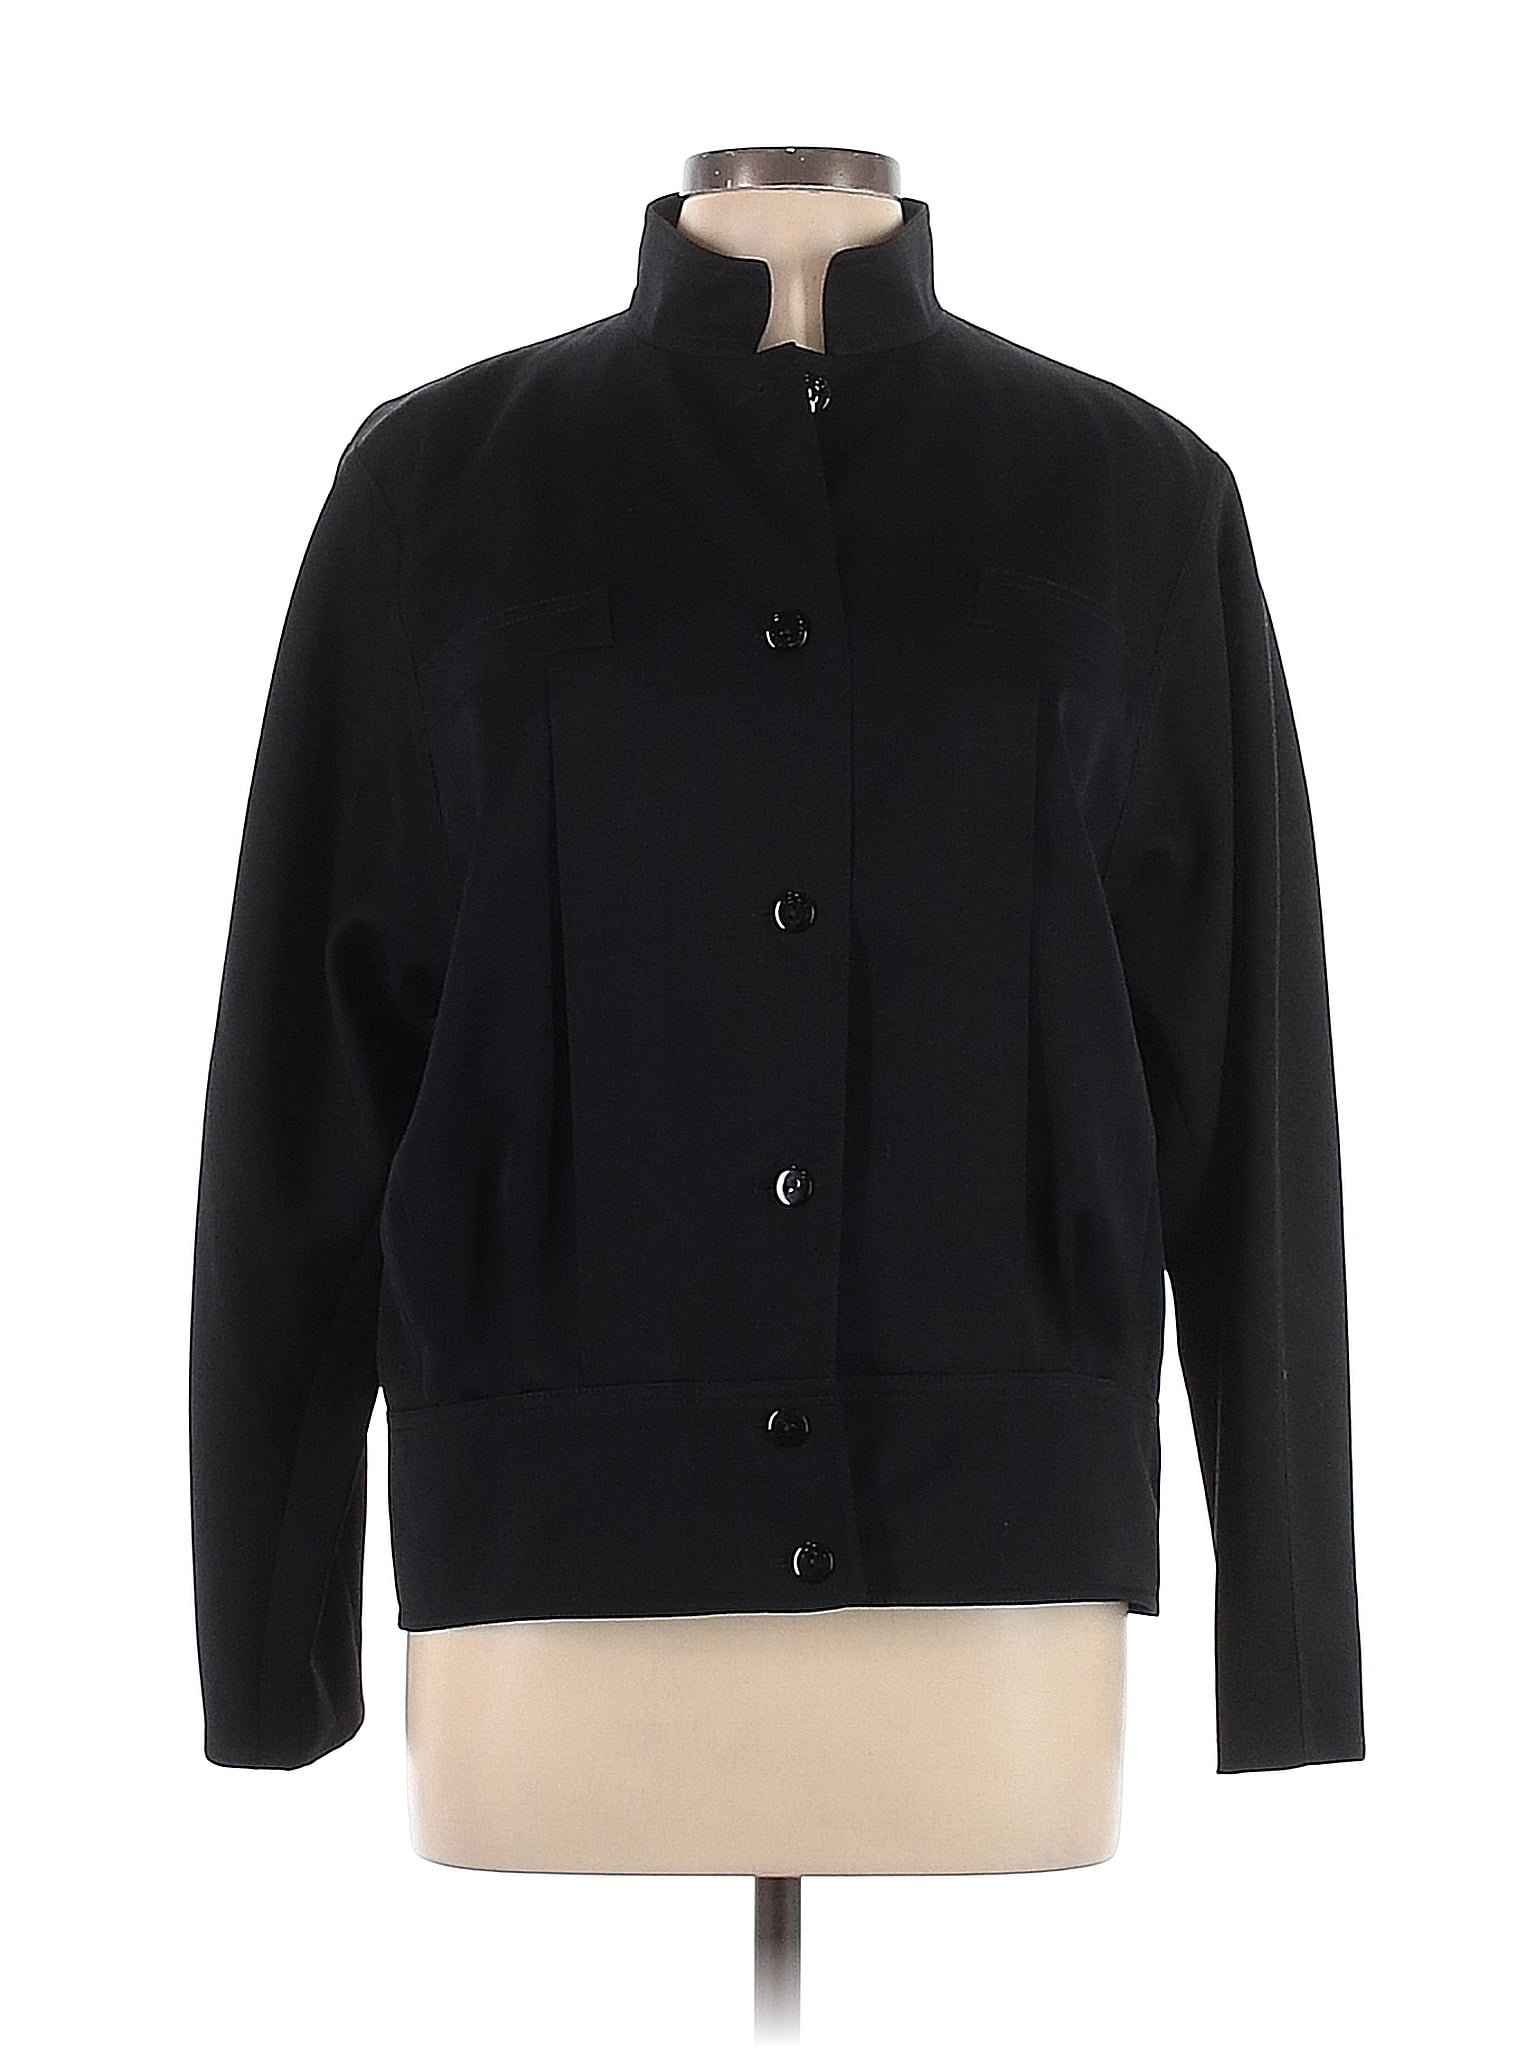 Louis Féraud Black Jacket Size 10 - 79% off | thredUP